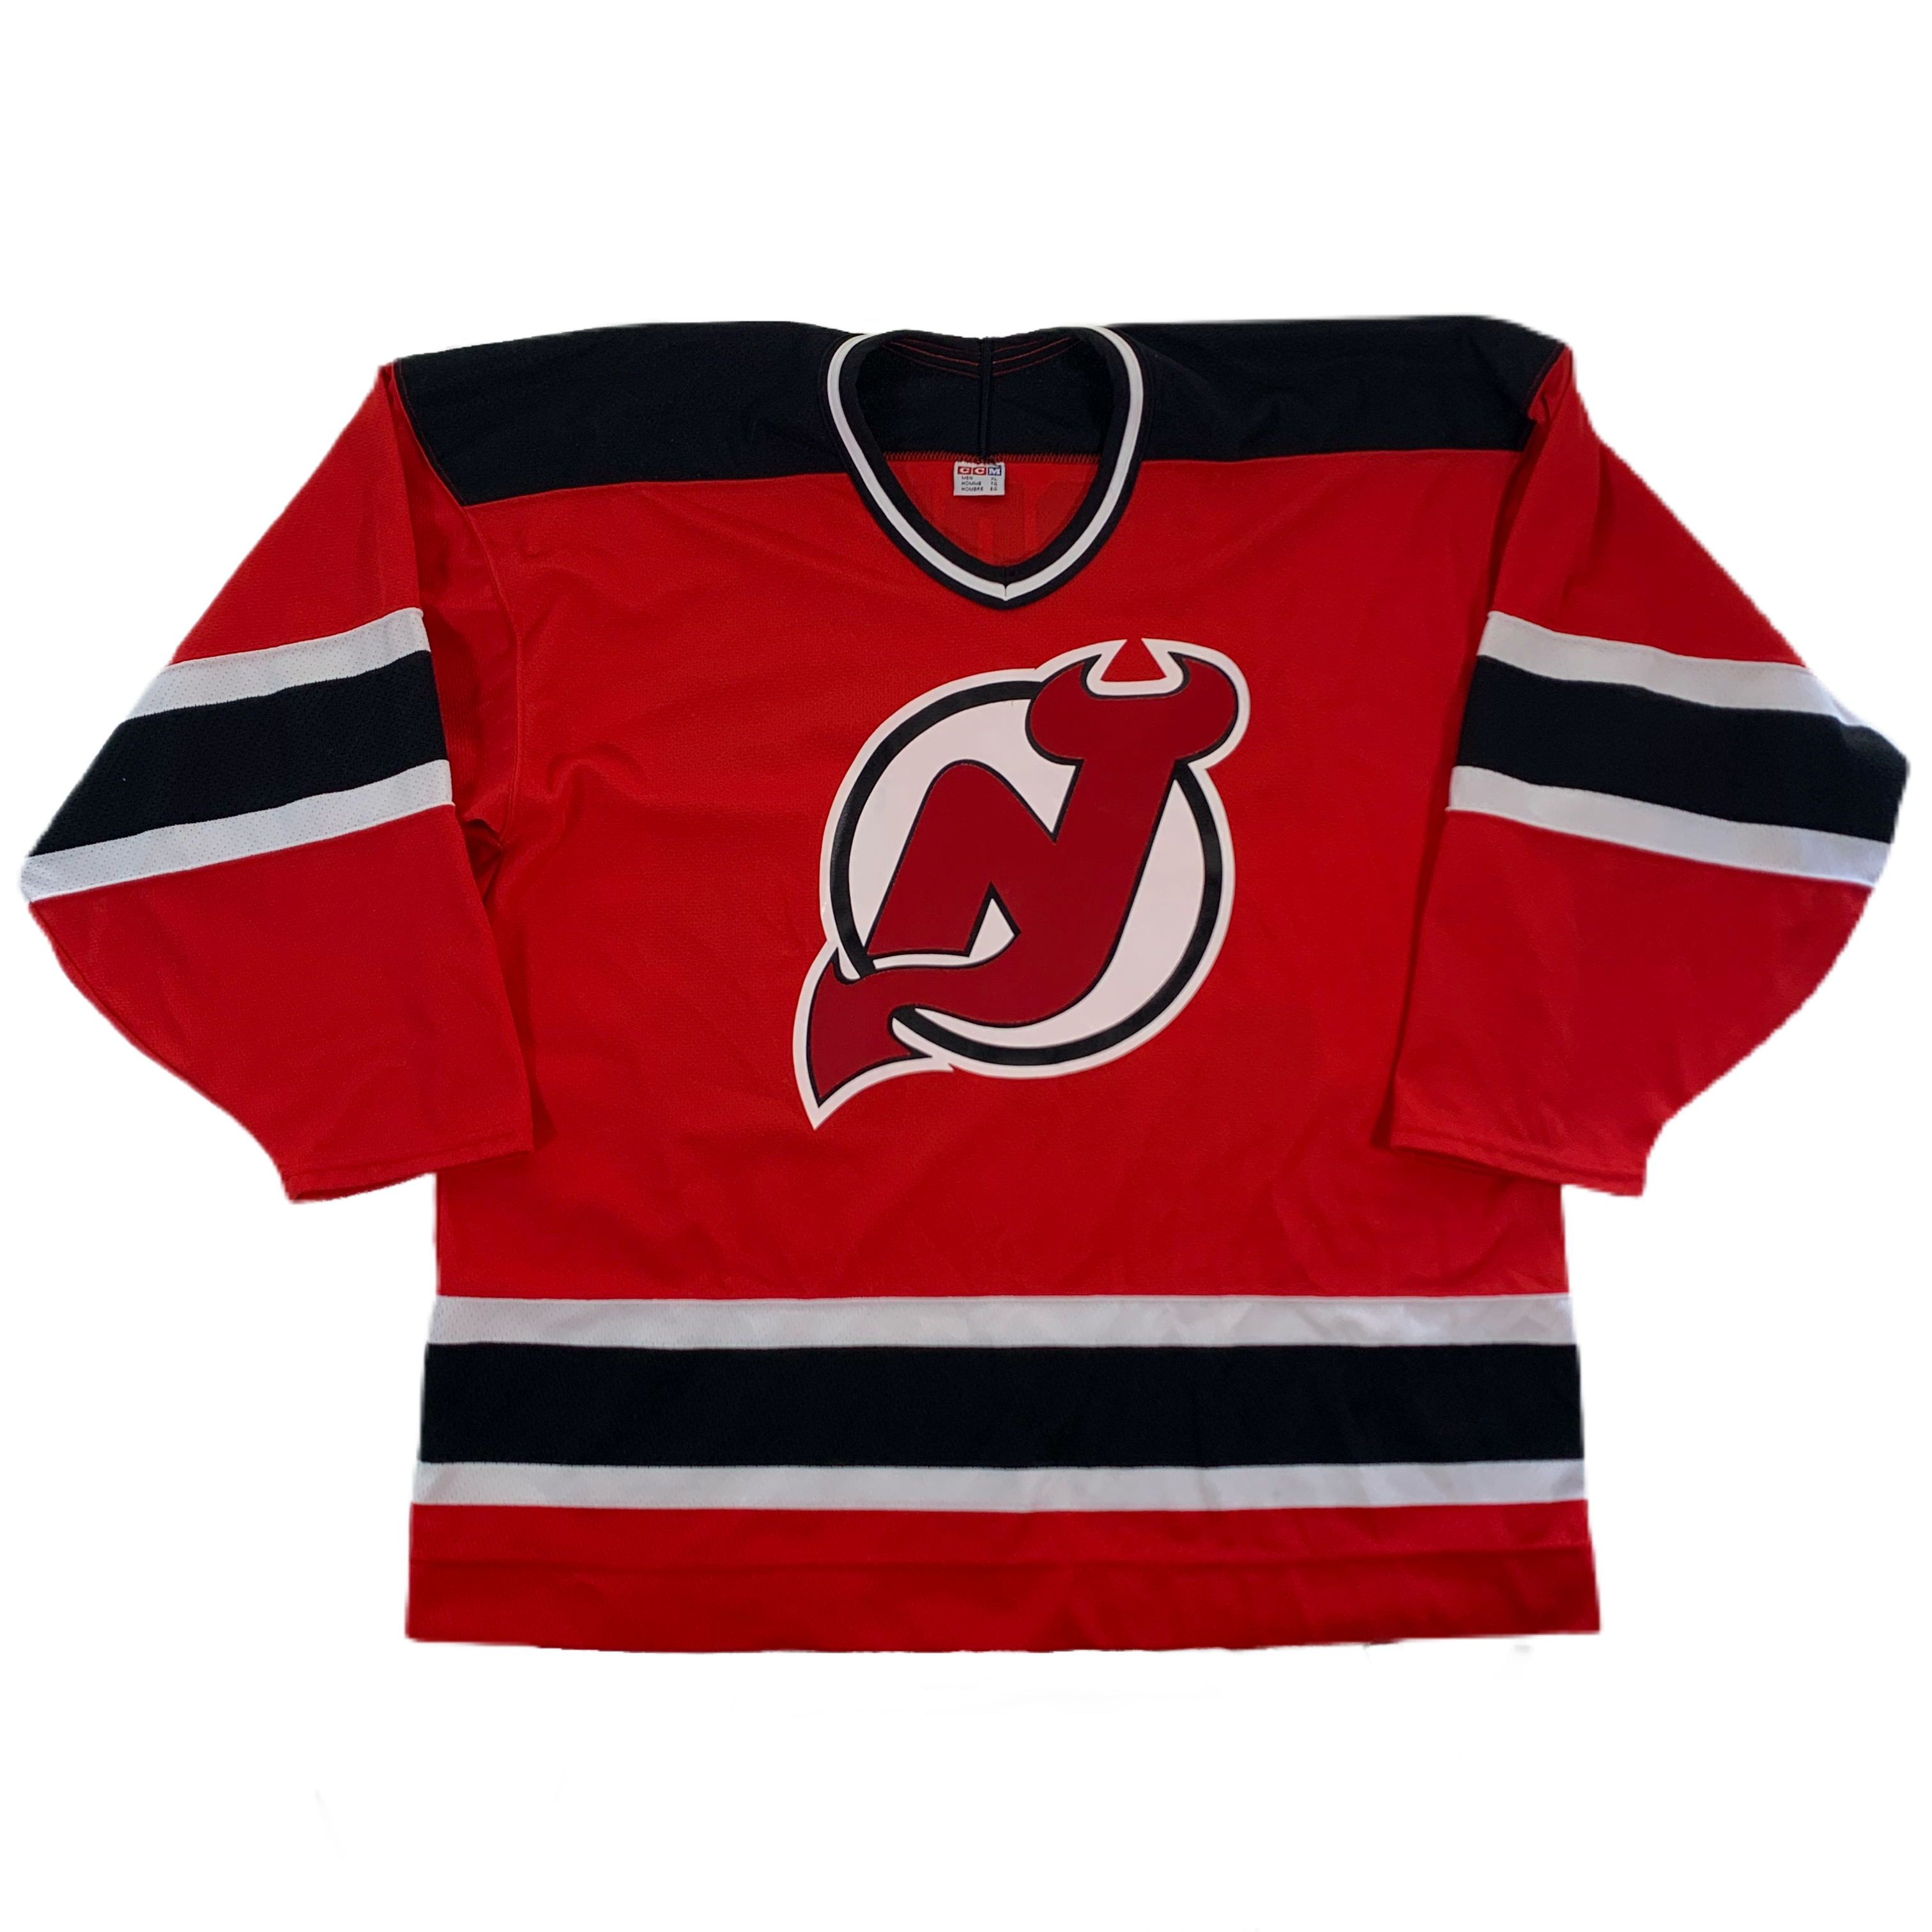 Goalie Martin Brodeur # 29 New Jersey Devils